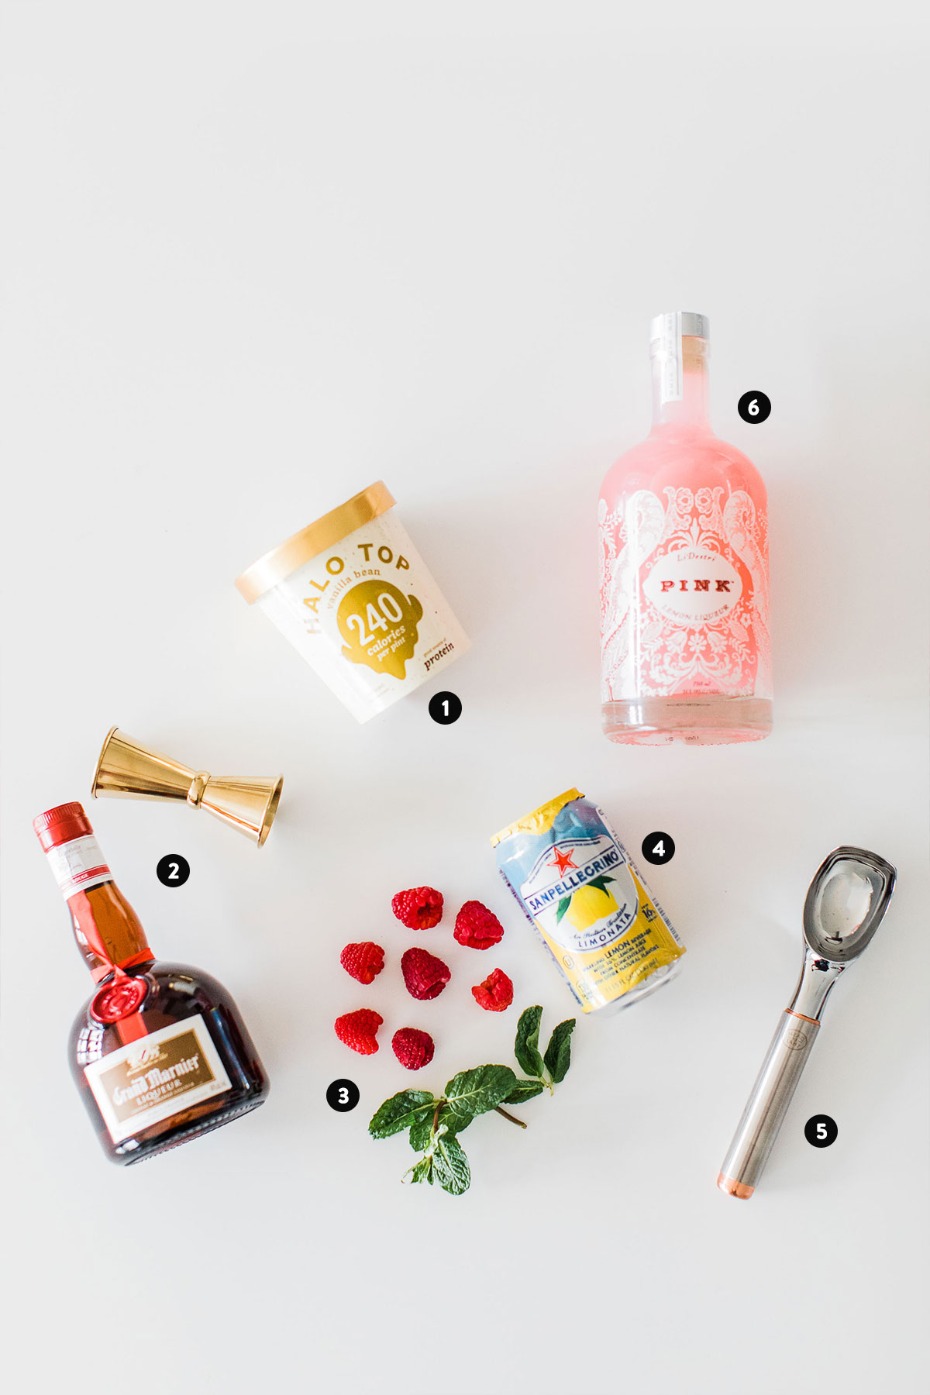 Ingredients For Sunset Ice Cream Float From LiDestri Pink Lemon Liqueur